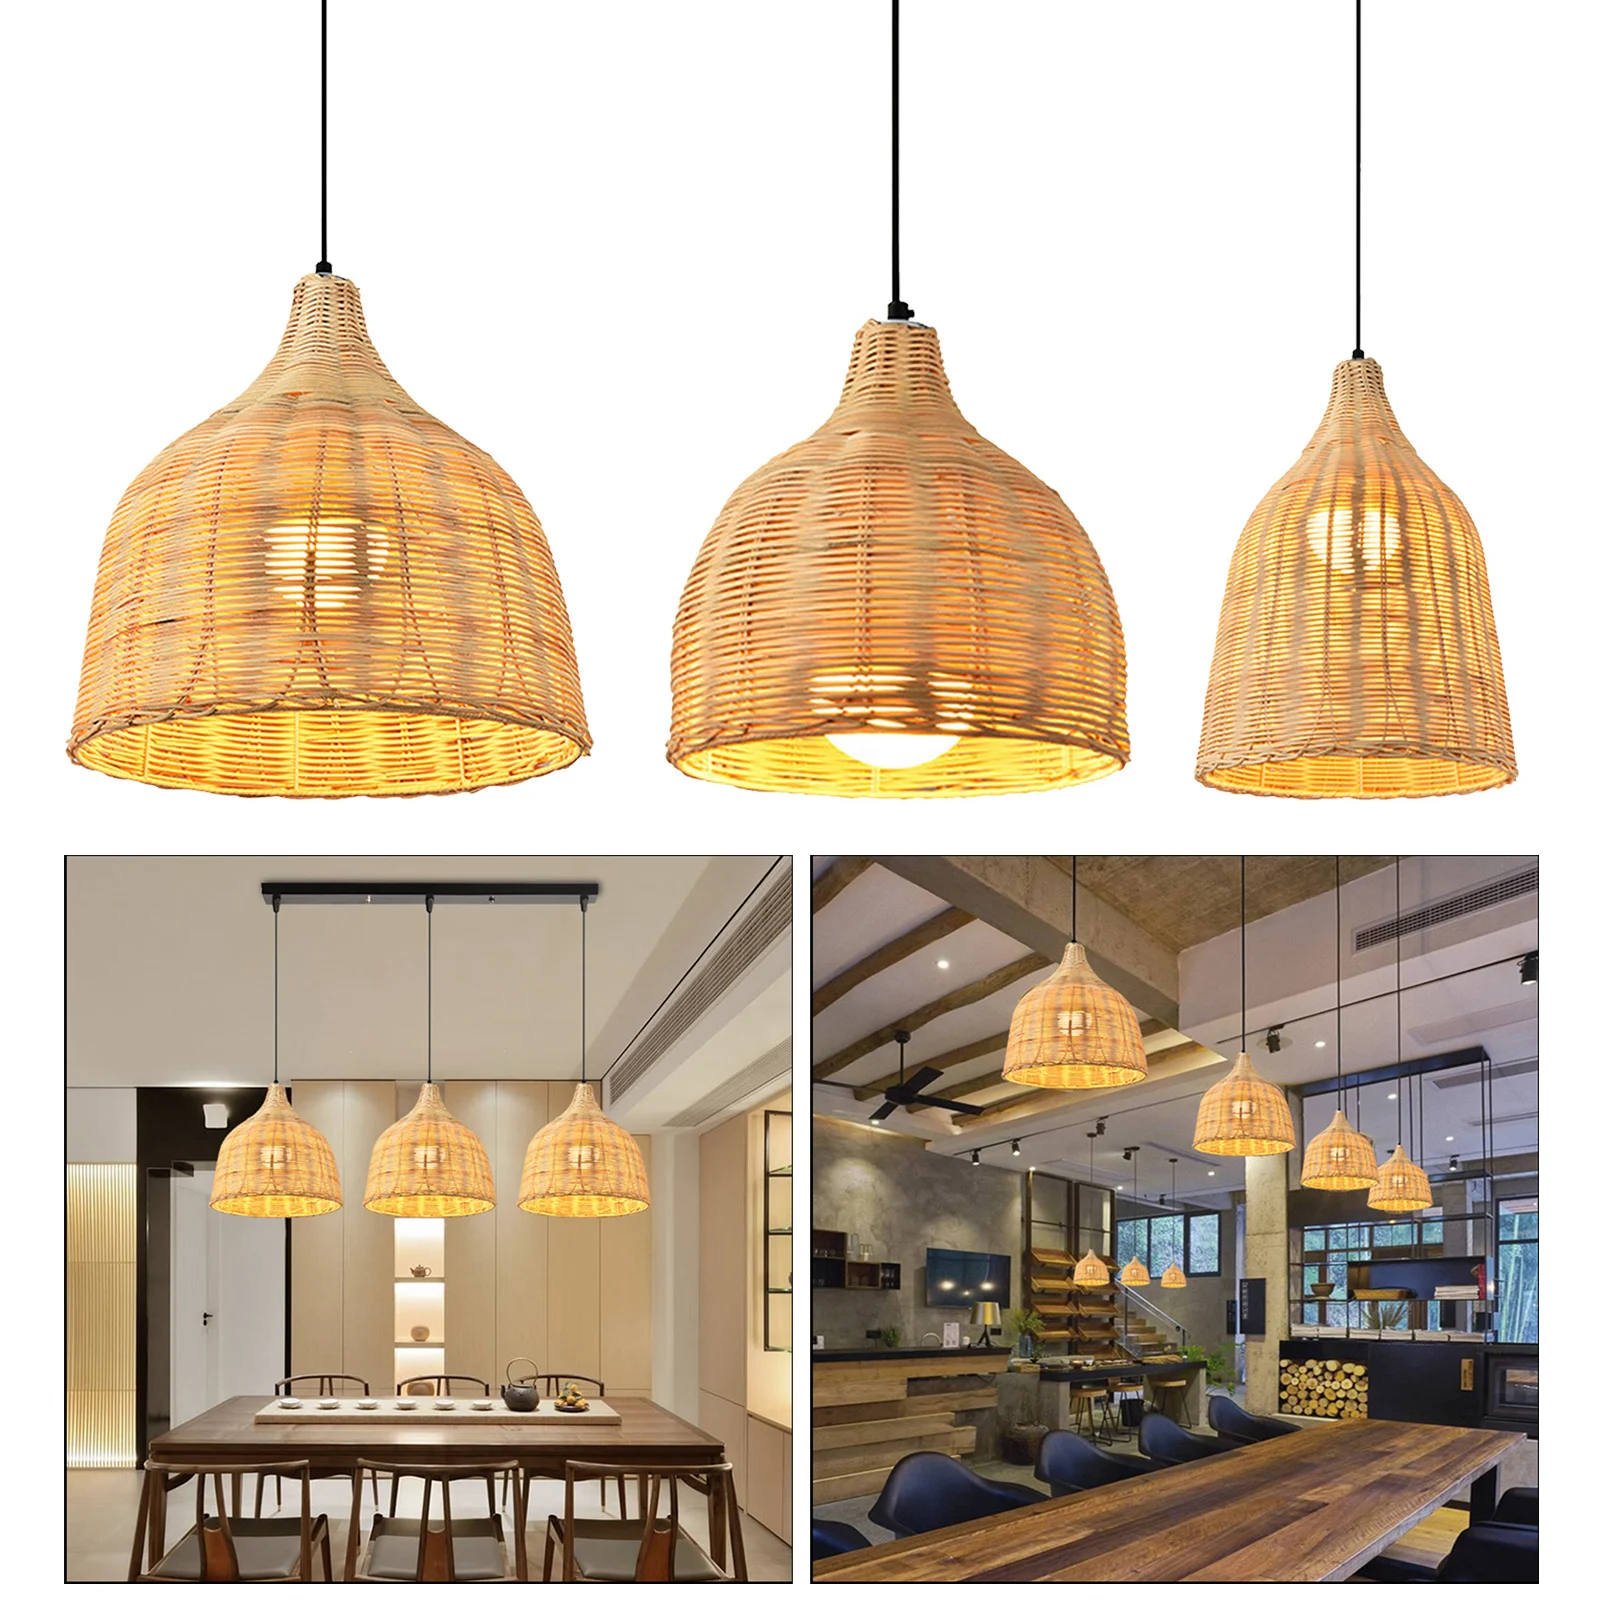 Modern Rattan Woven Ceiling Light Fixture Pendant Lamp Chandelier For Living Room Hotel Restaurant Cafe Office Decorative